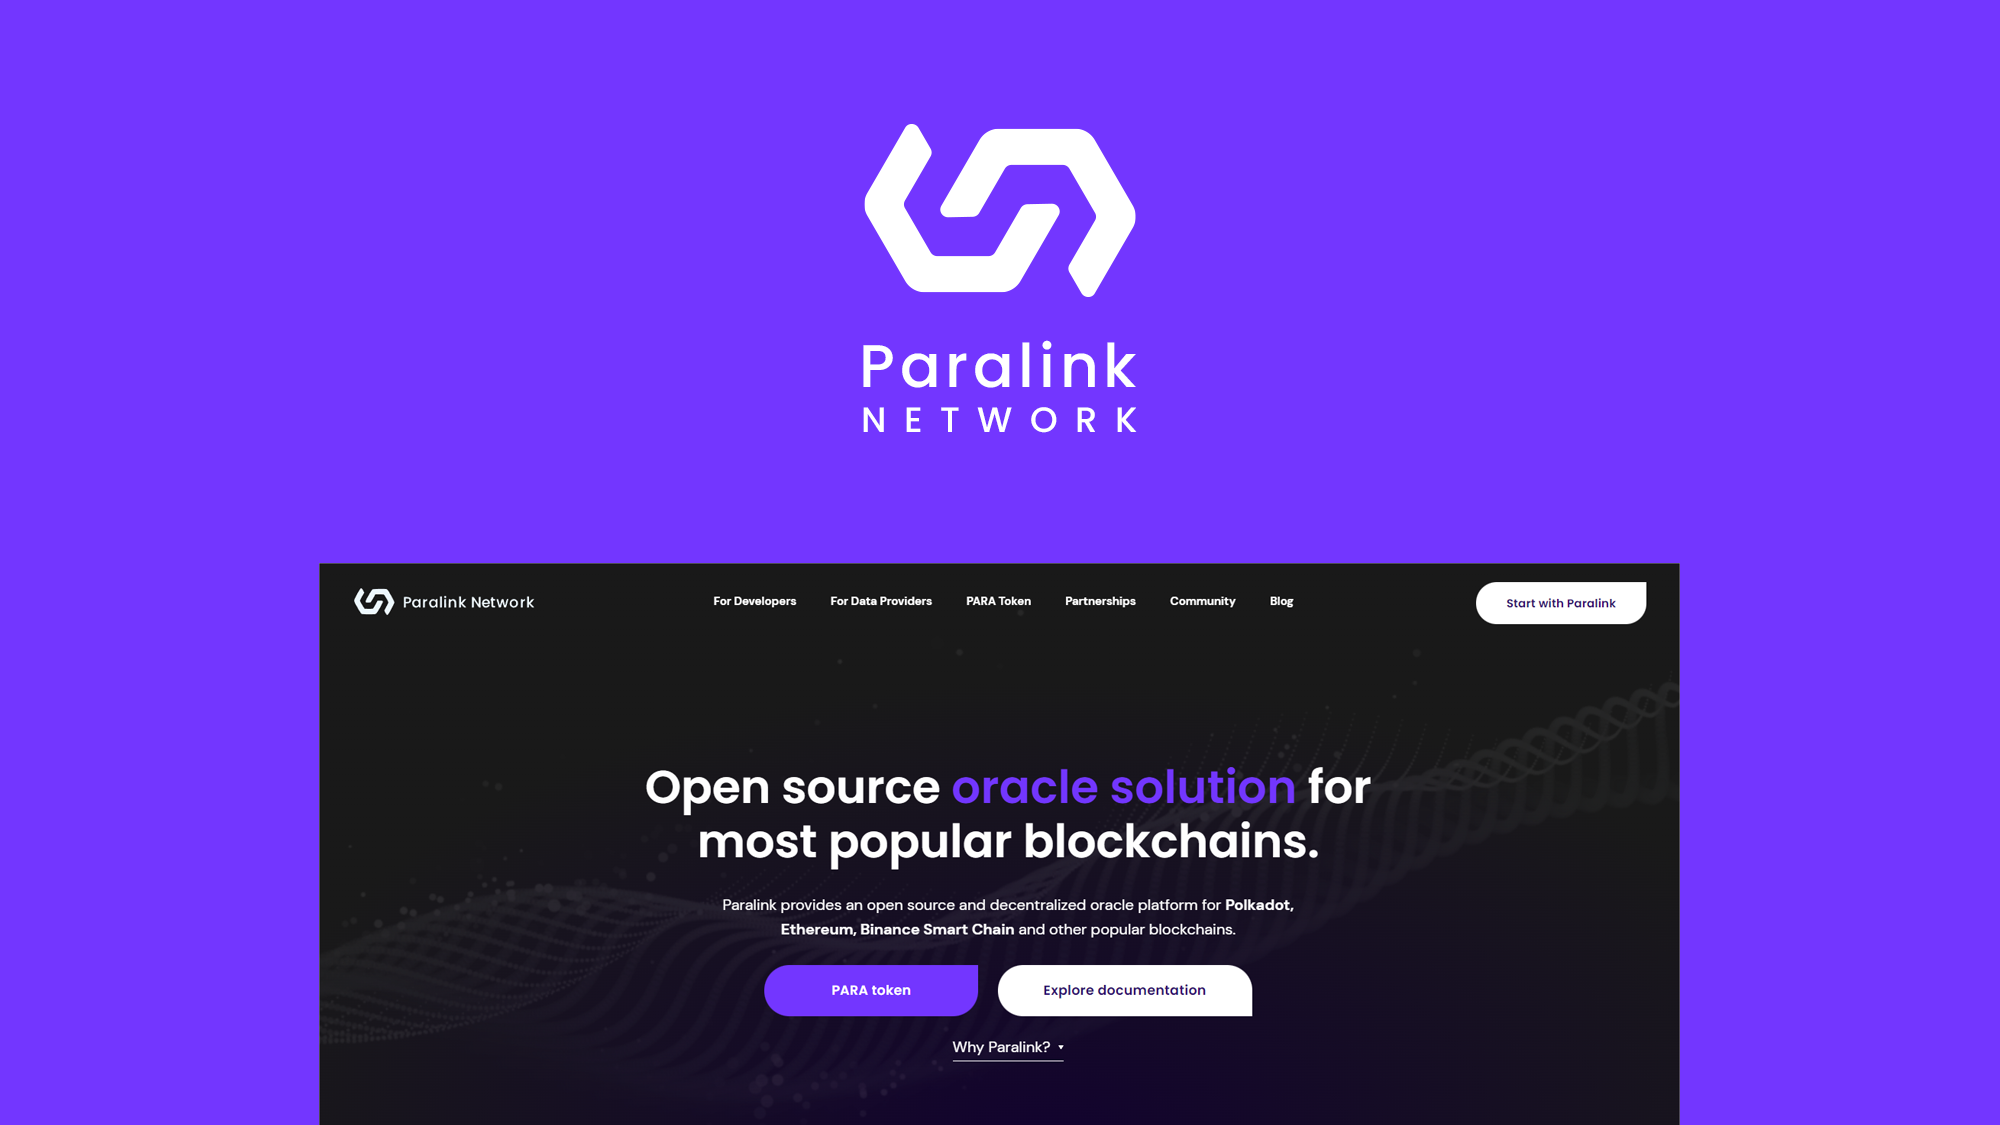 New Paralink Network website!